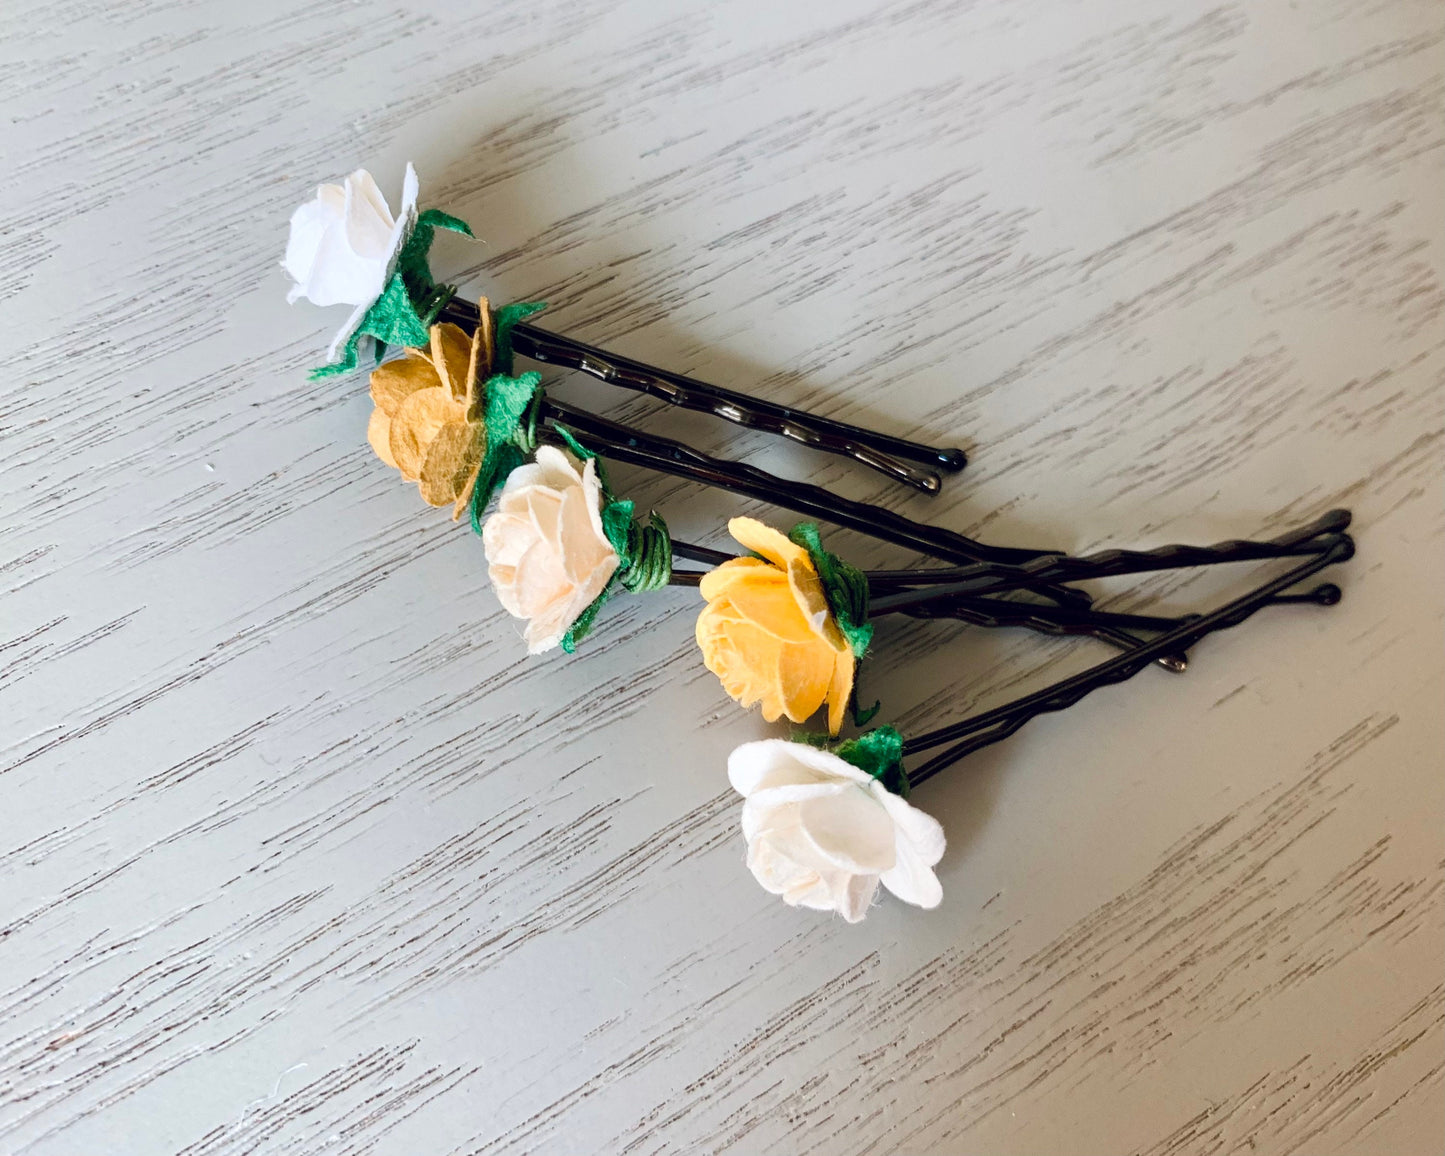 Golden Hour Rose Hair Pins, Set of 5 Paper Flower Bobby Pins in Rust Orange, Cream + Soft Gold, Rustic Bridal Hair Accessories Bohemian Wedding MPR6